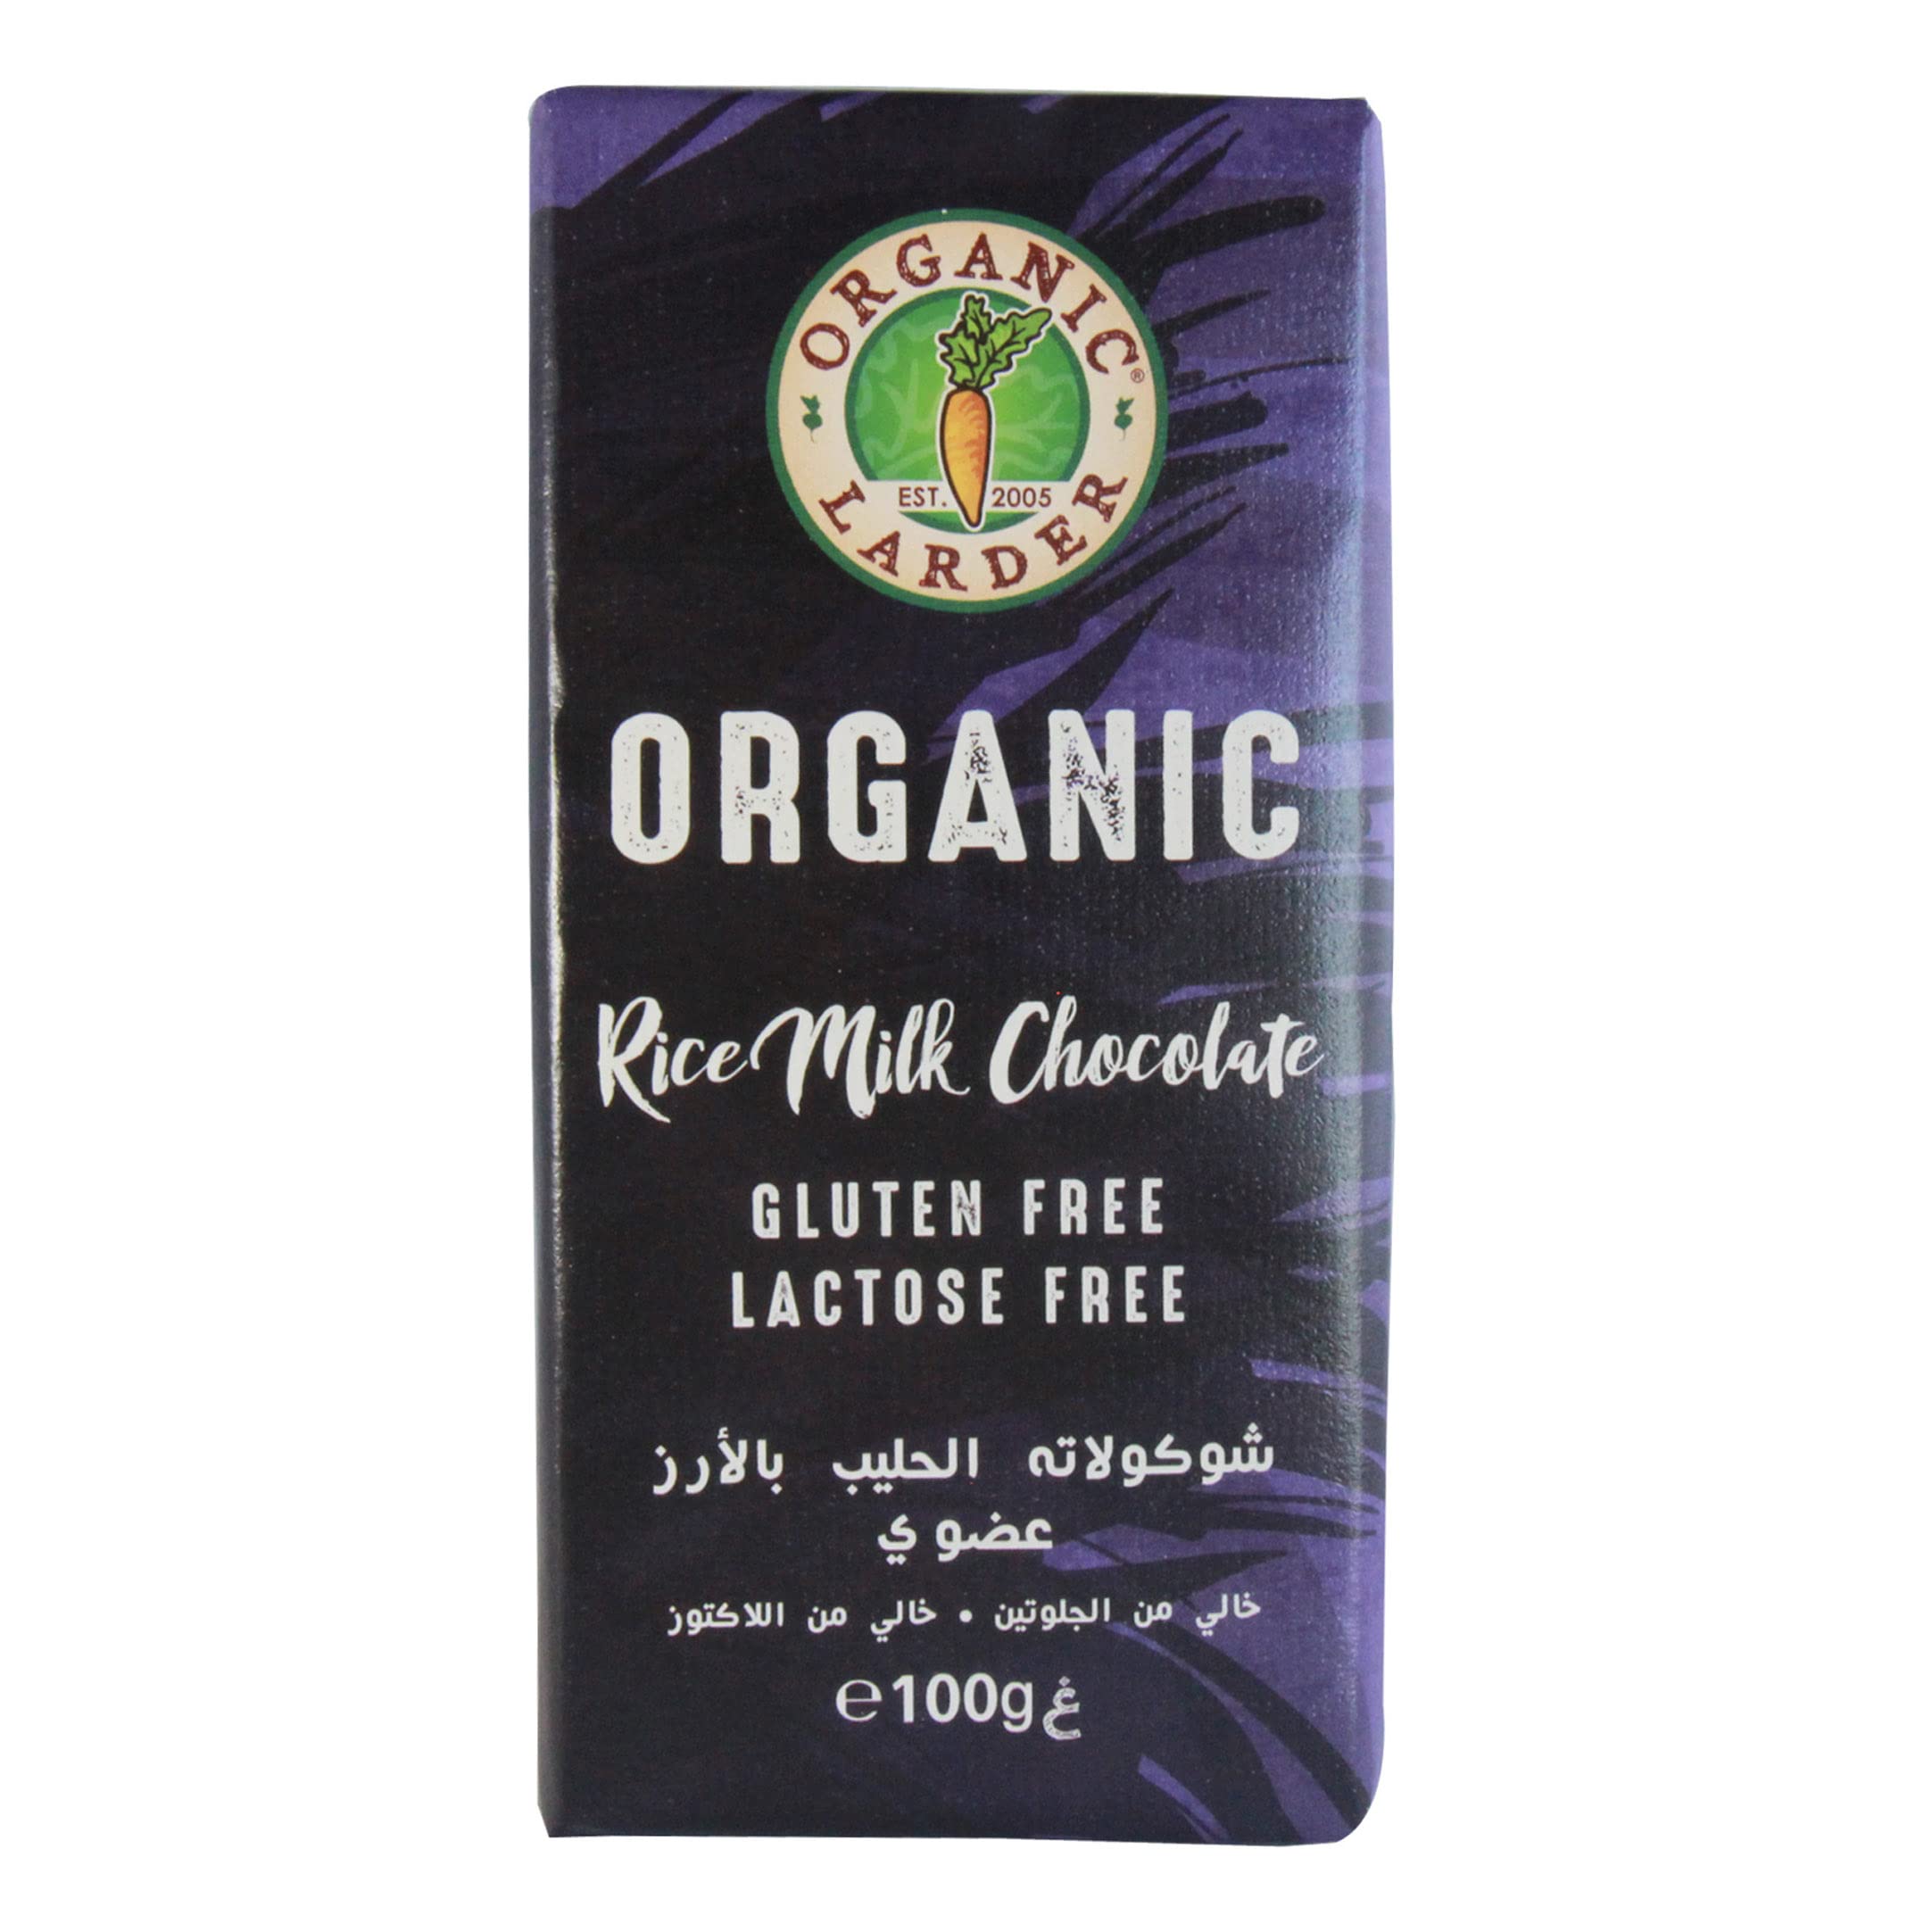 ORGANIC LARDER Rice Milk Chocolate, 100g - Organic, Vegan, Gluten Free, Lactose Free